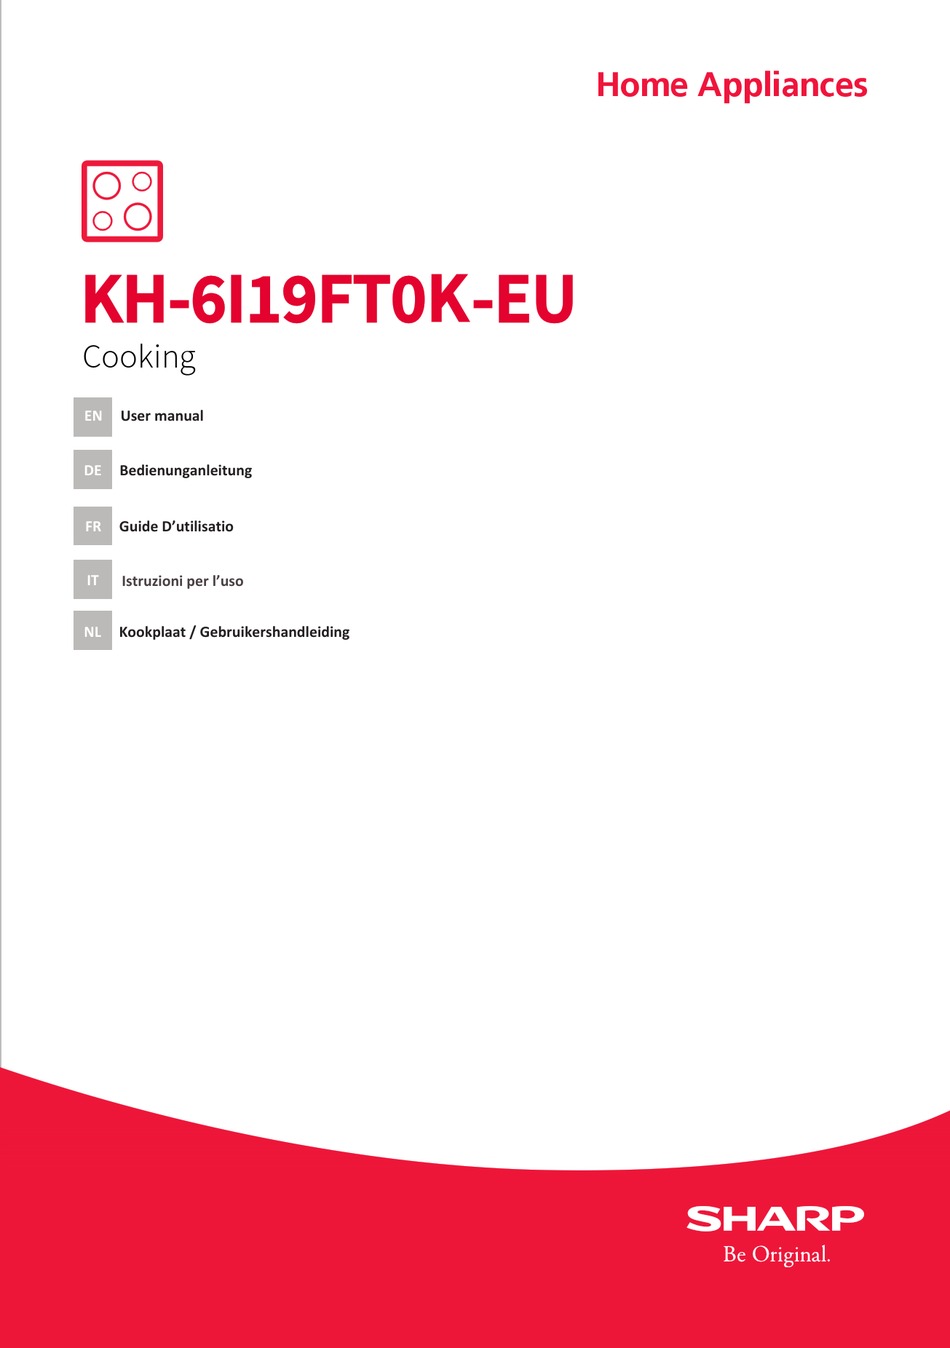 SHARP KH-6I19FT0K-EU USER MANUAL Pdf | ManualsLib Download